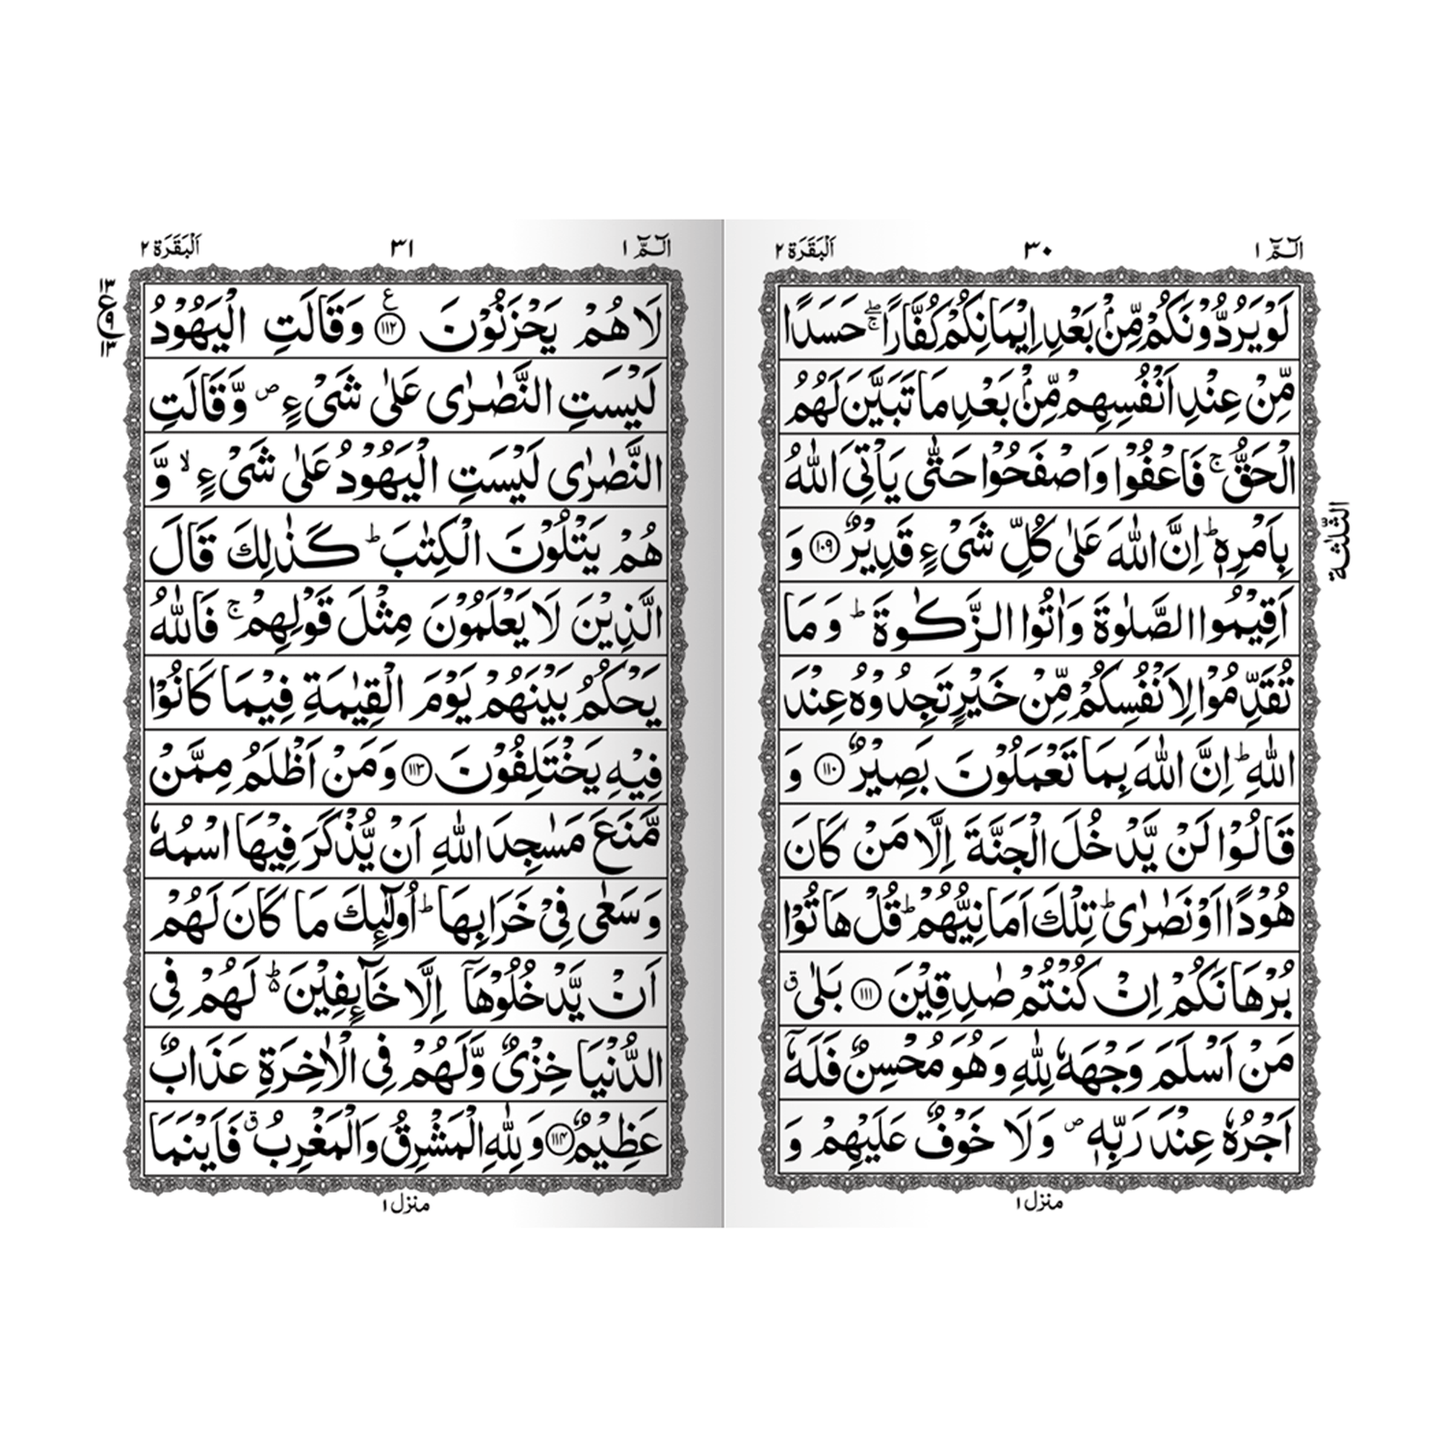 [IK229] Surah Yaseen (With Urdu & English Translation)